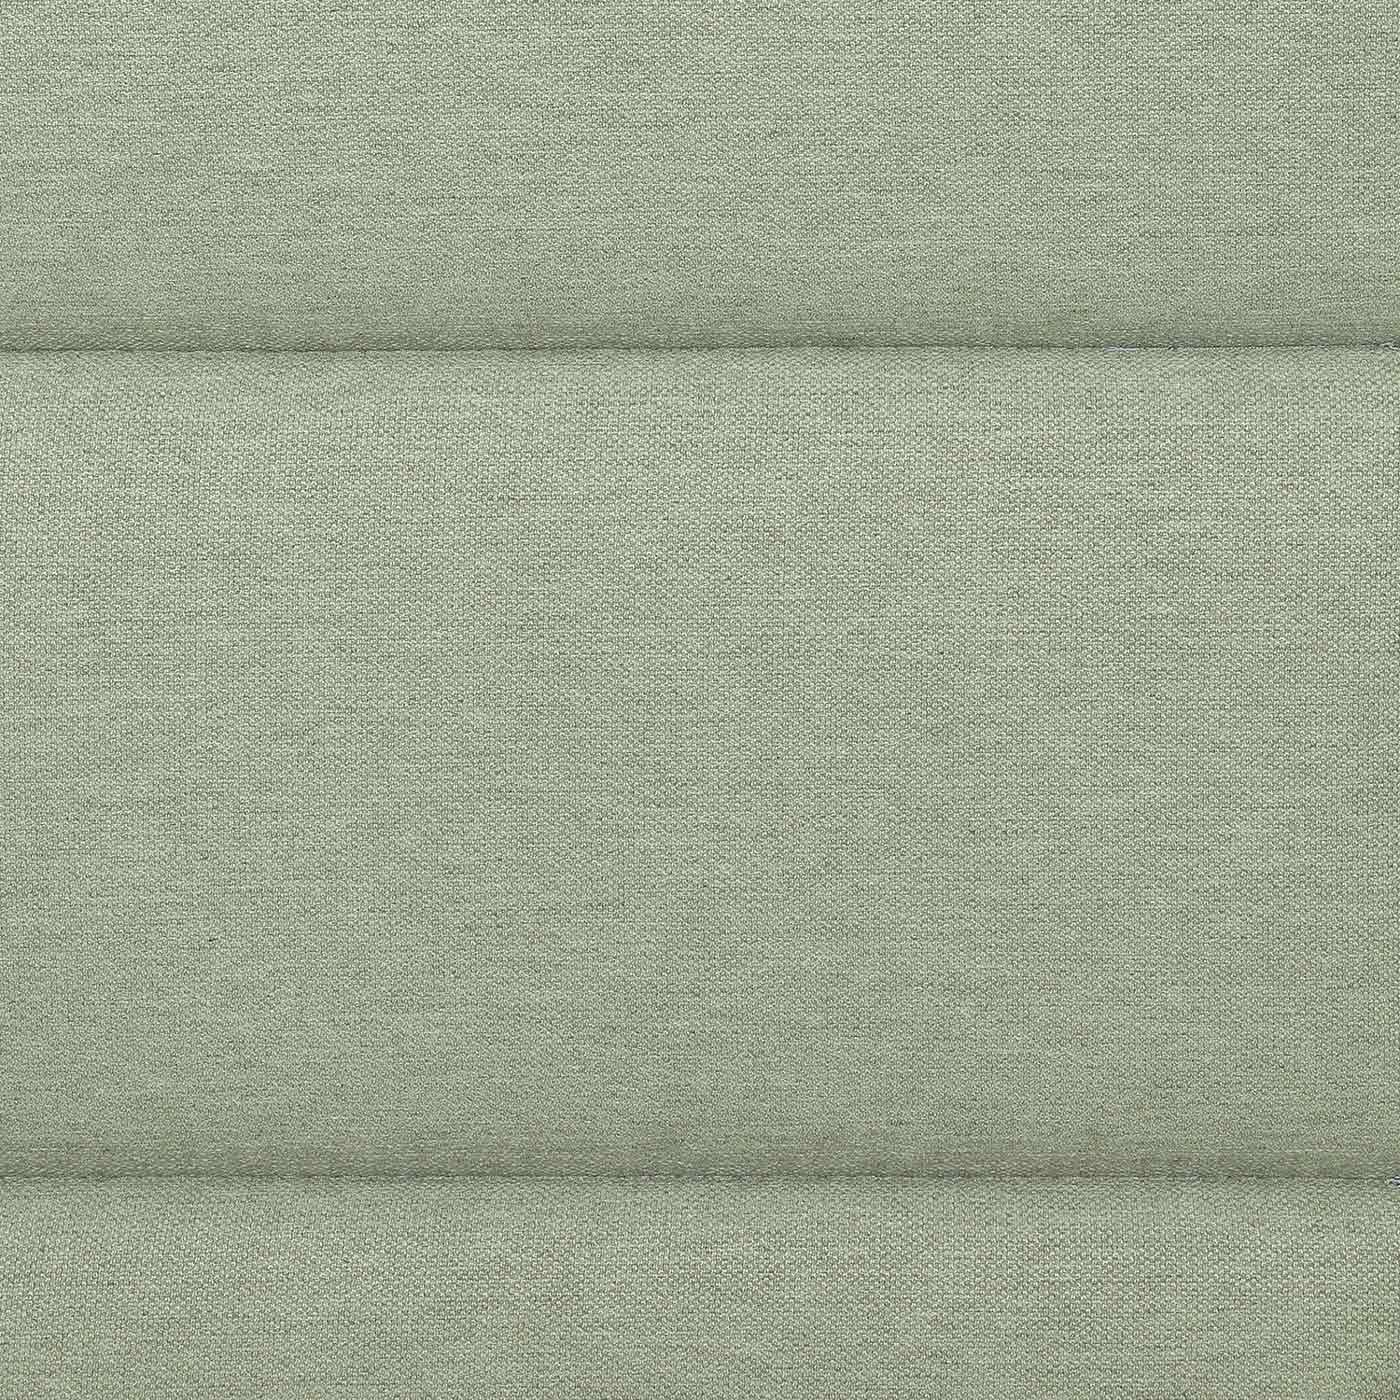 GO-DE 108x48cm Polyester Sesselauflage Grün mittel